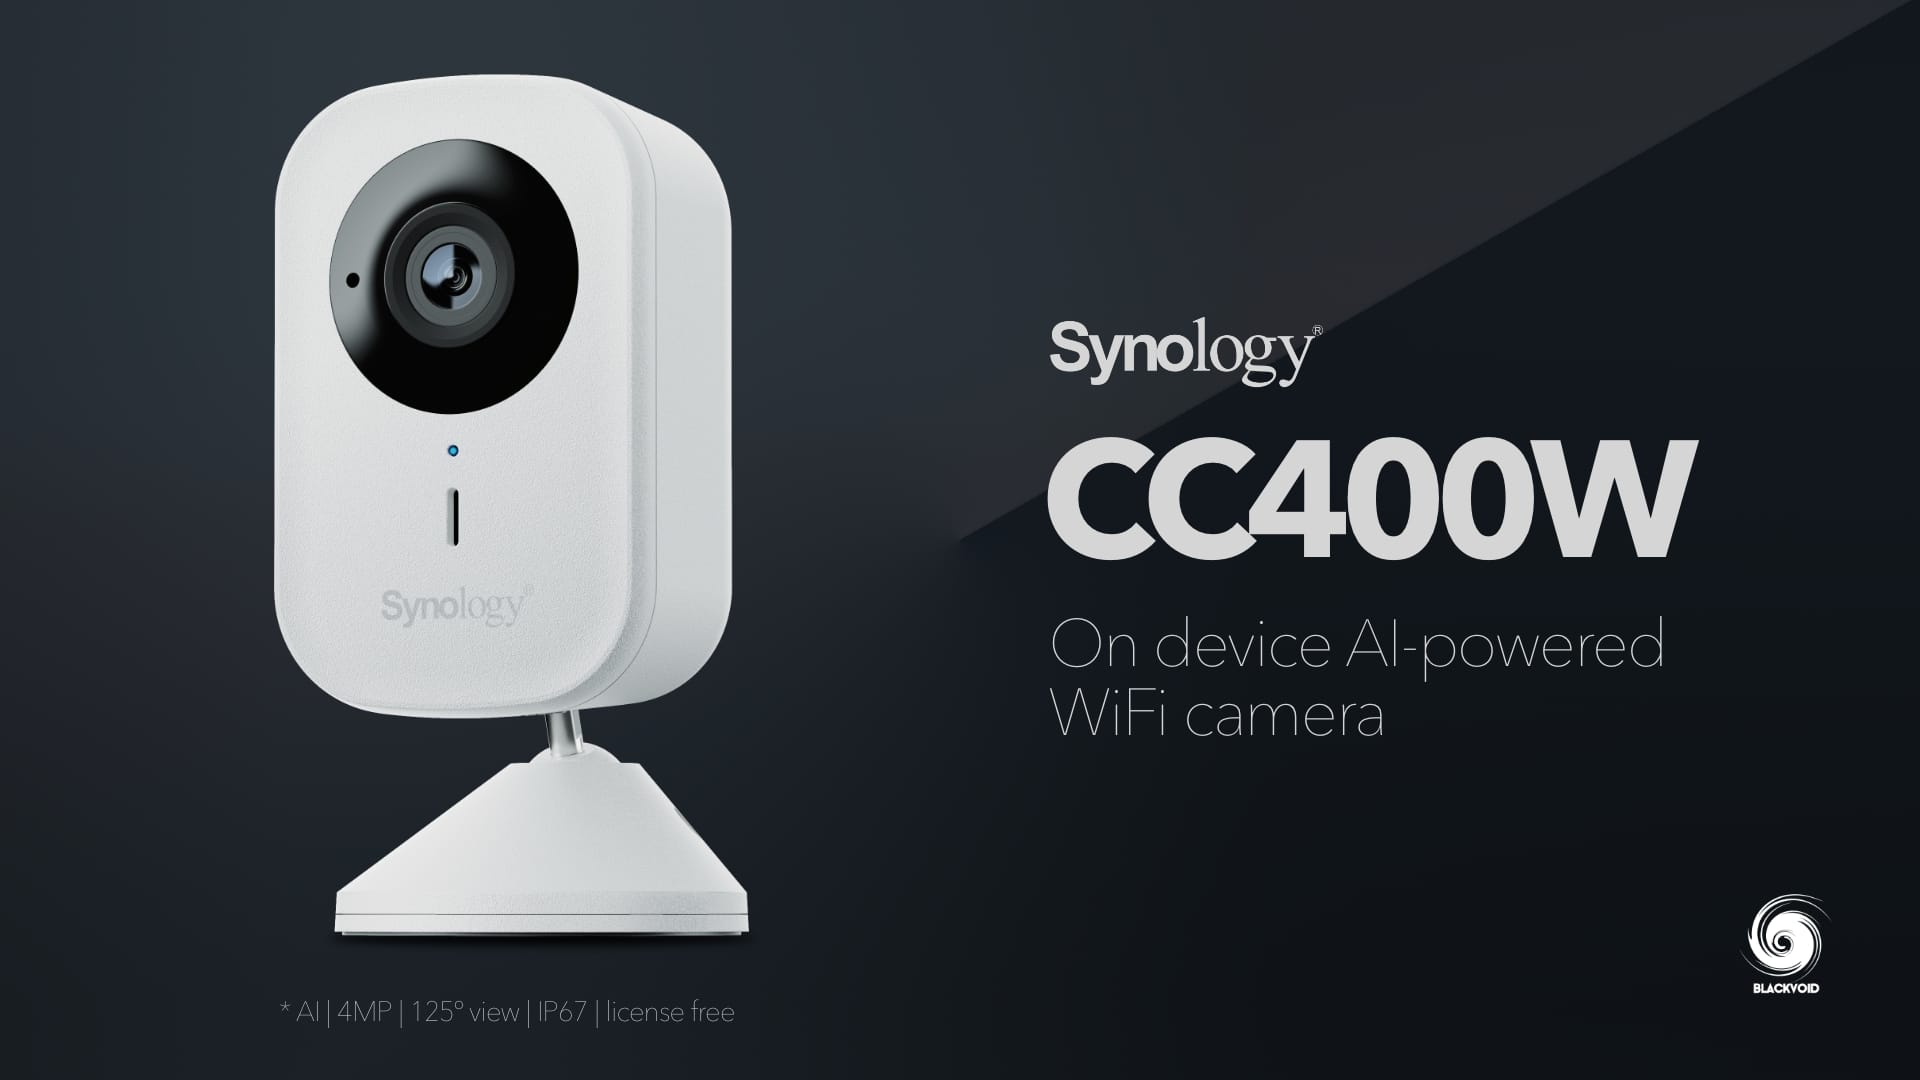 Synology CC400W WiFi camera announcement